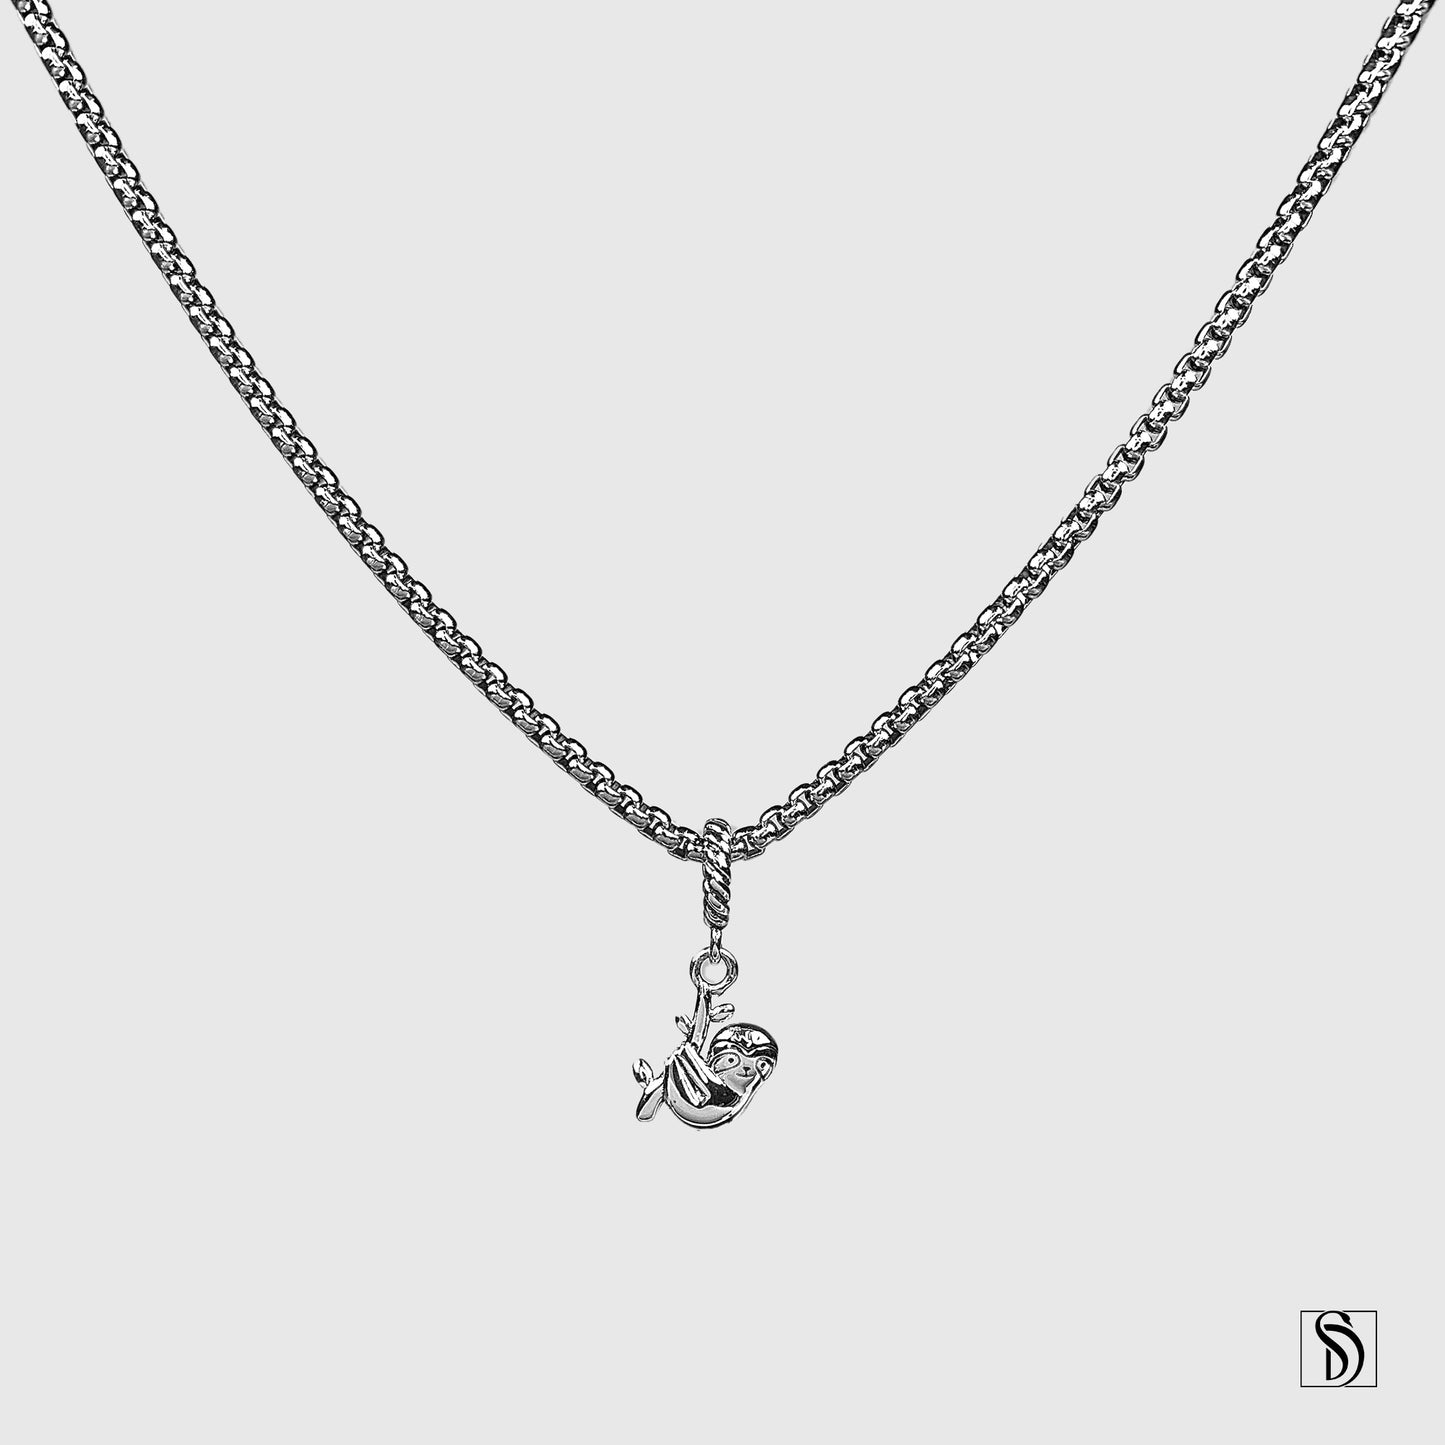 Mini Hanging Sloth Charm Necklace